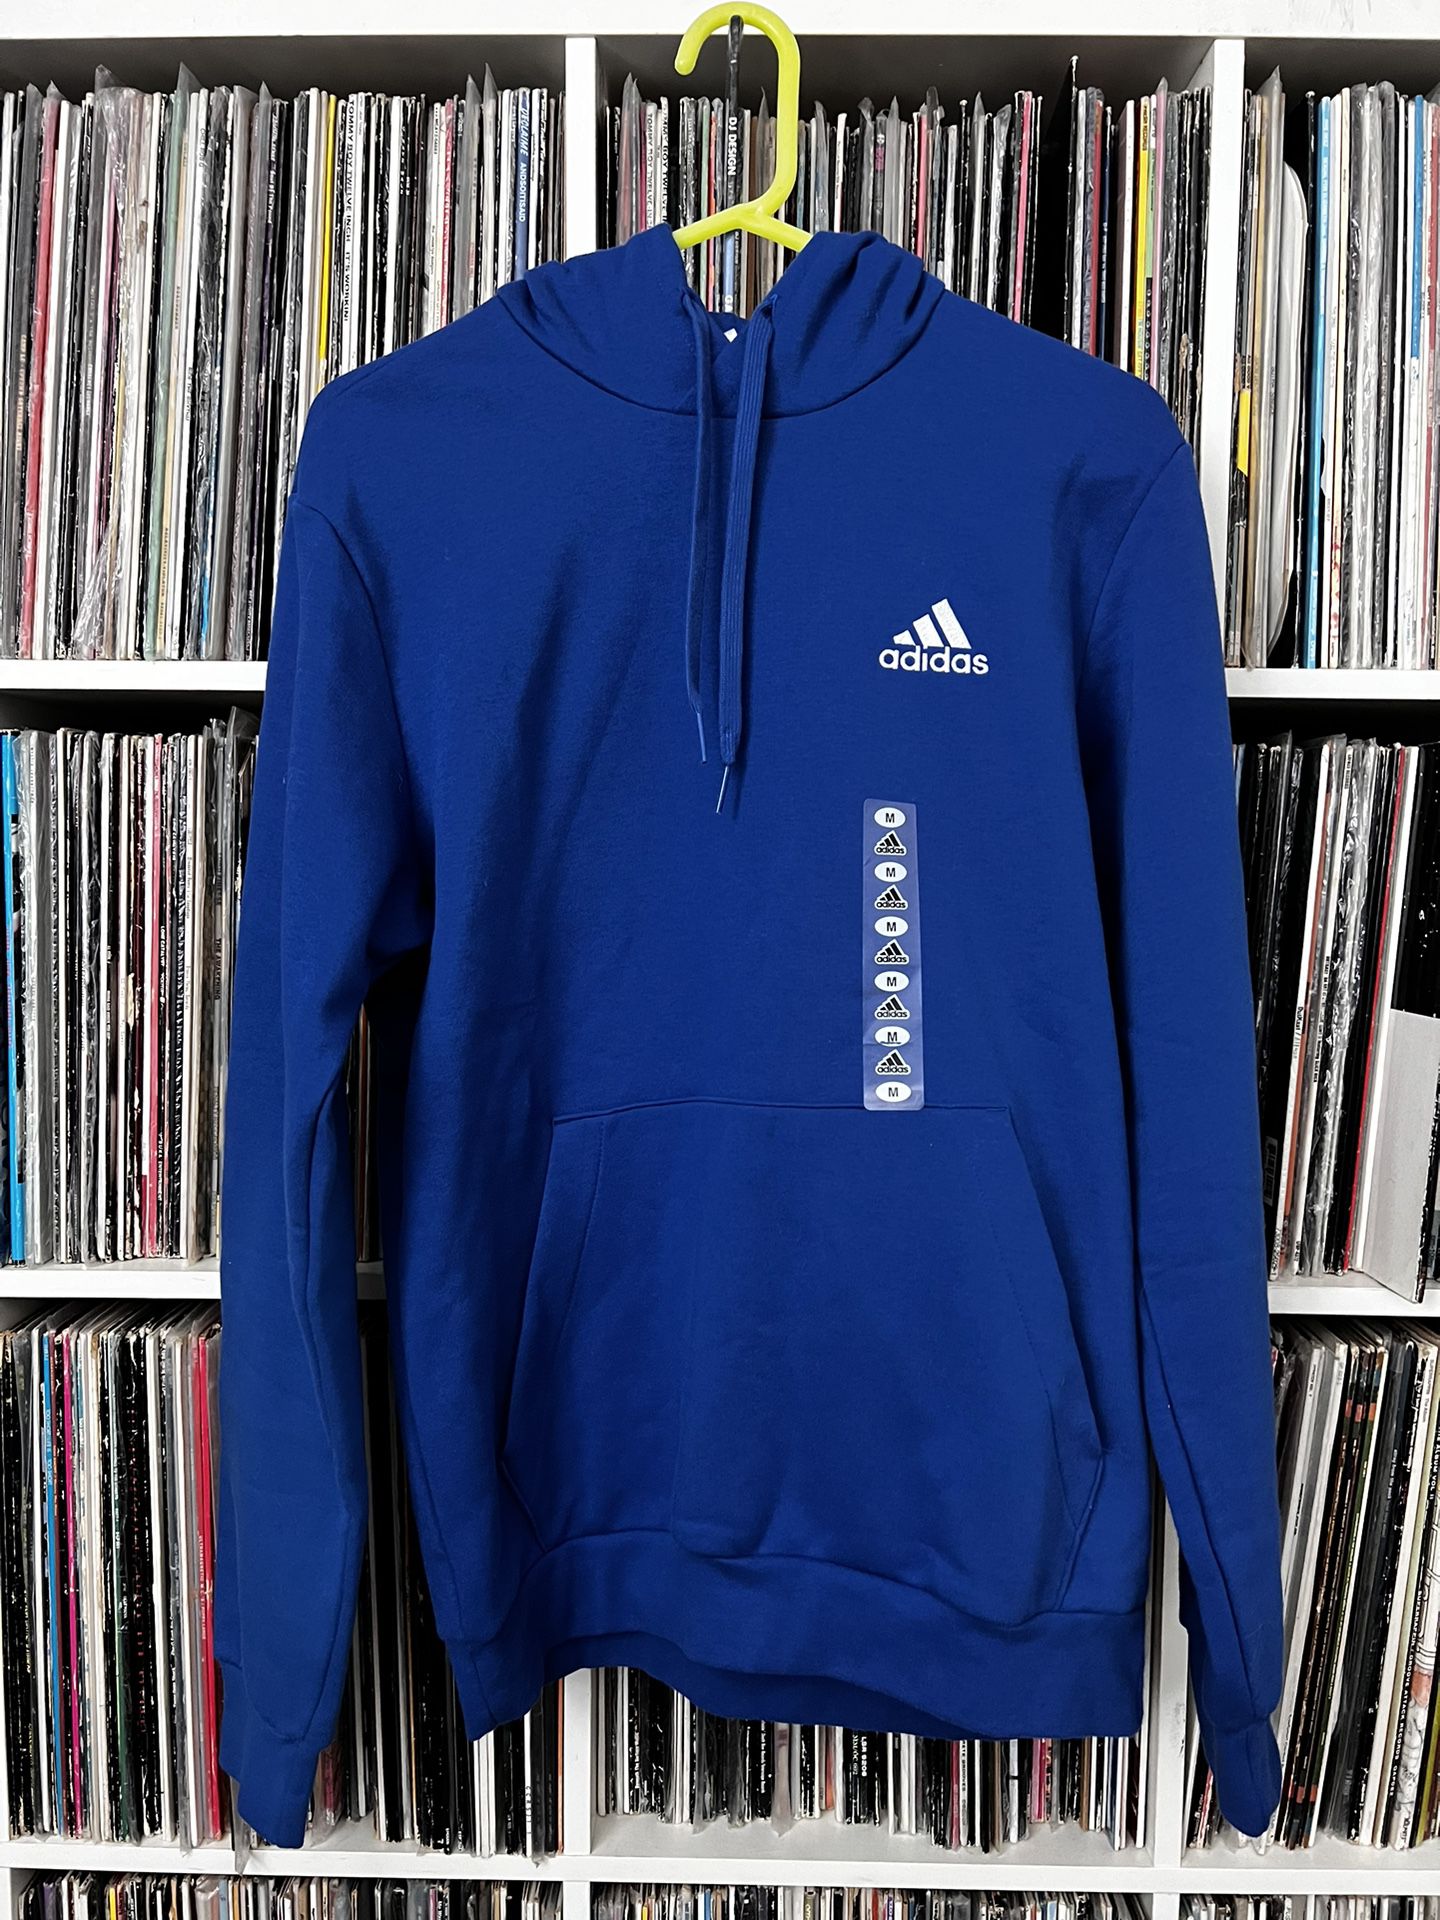 Adidas Hoodie Sweatshirt - Brand New With Tags